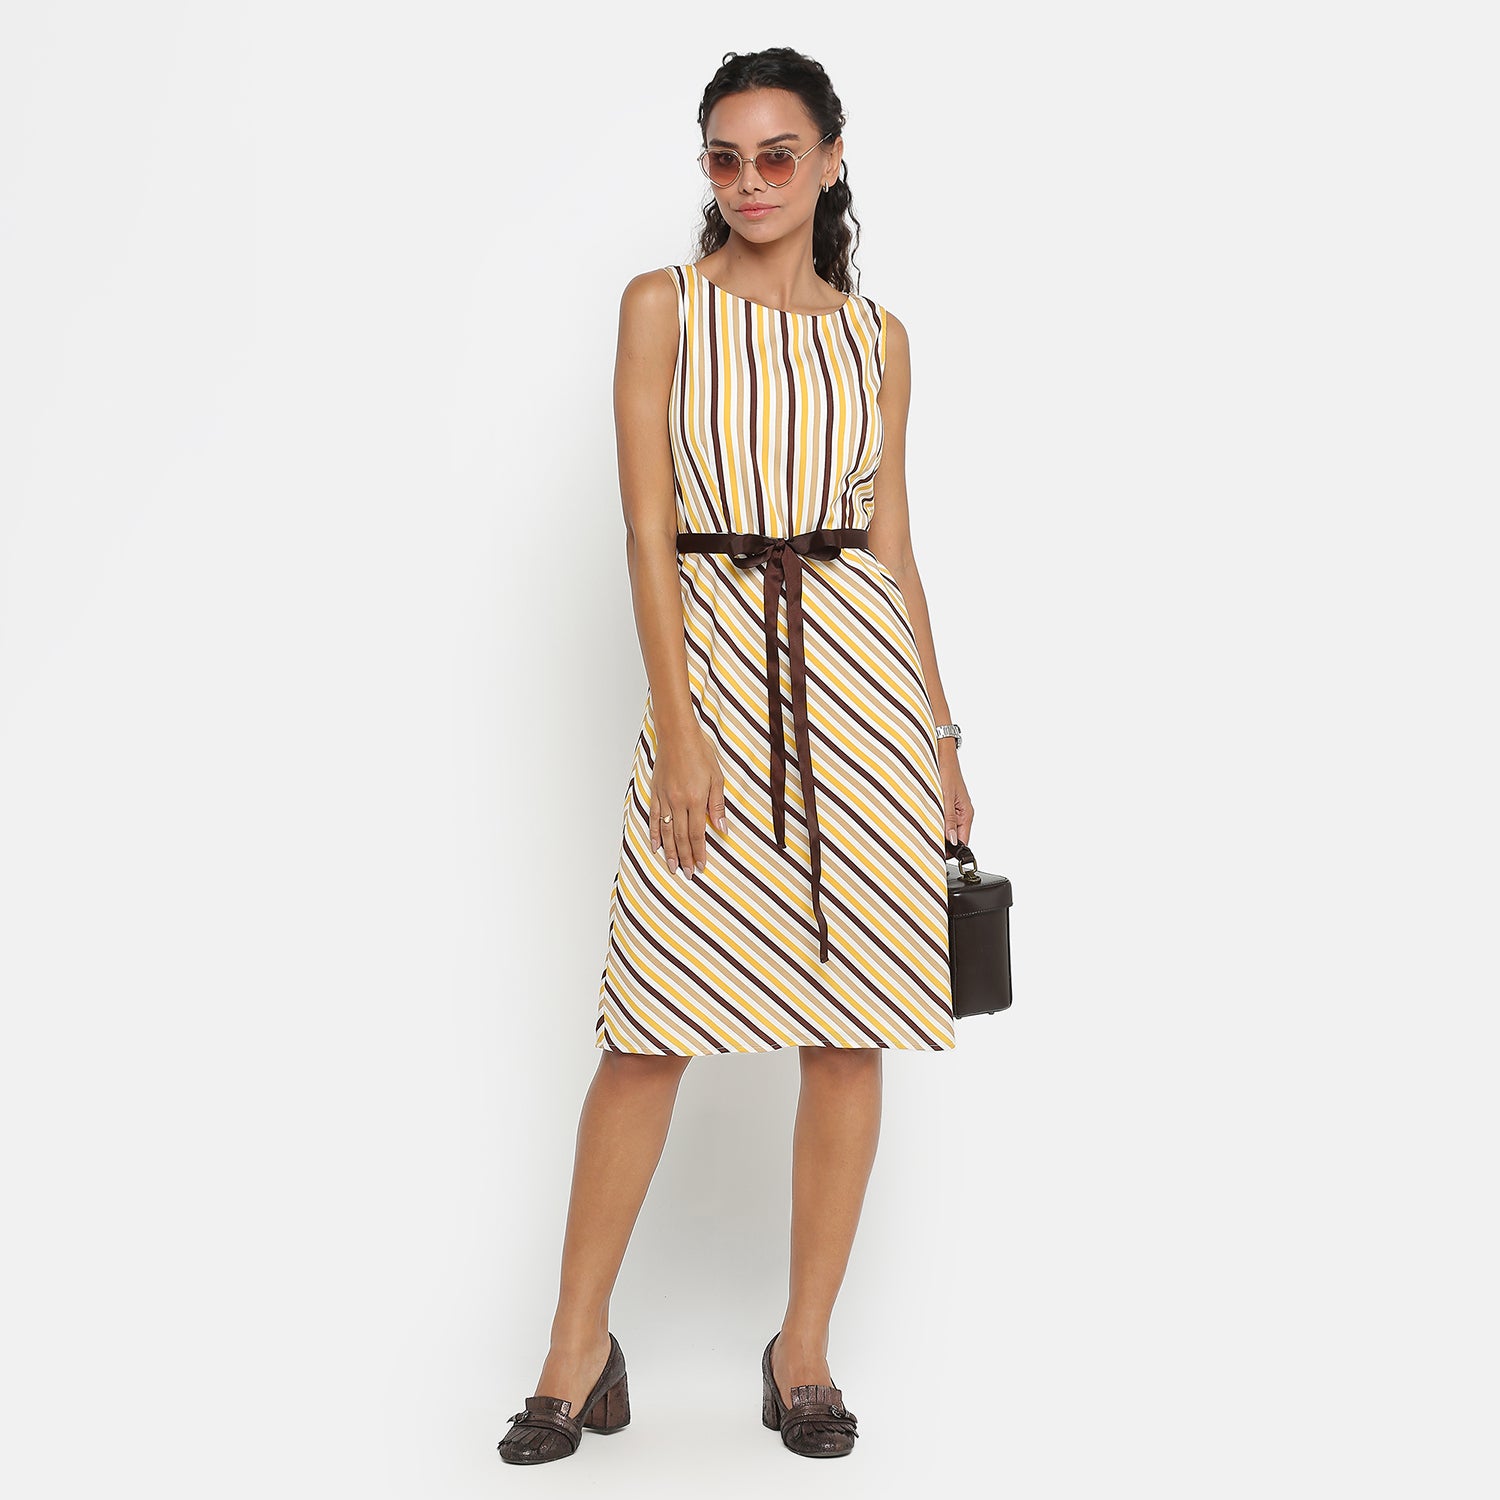 Yellow stripe sleeveless dress with brown belt